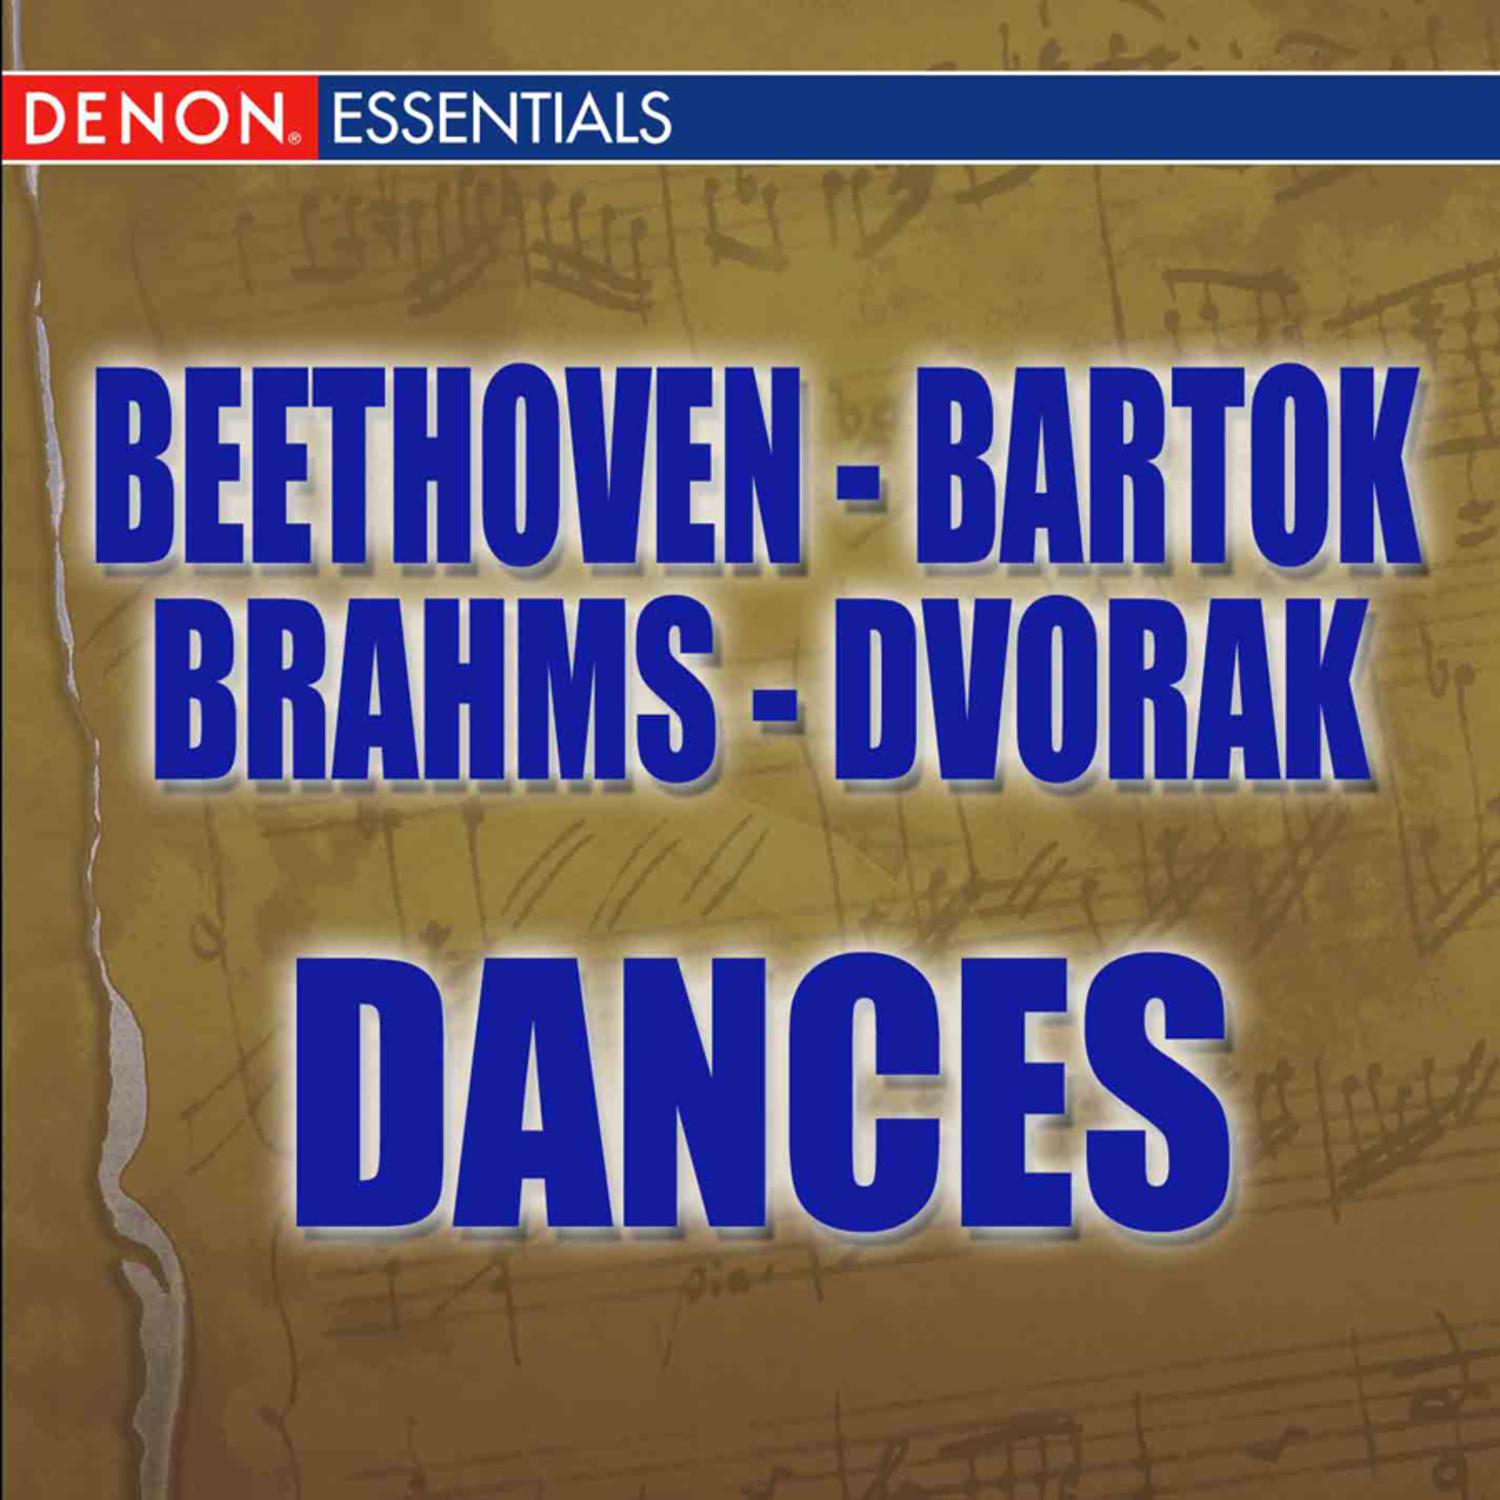 Beethoven: 12 Contredanses  Brahms: Hungarian Dances  Dvora k: Slavonic Dances  Barto k: Romanian Folk Dances